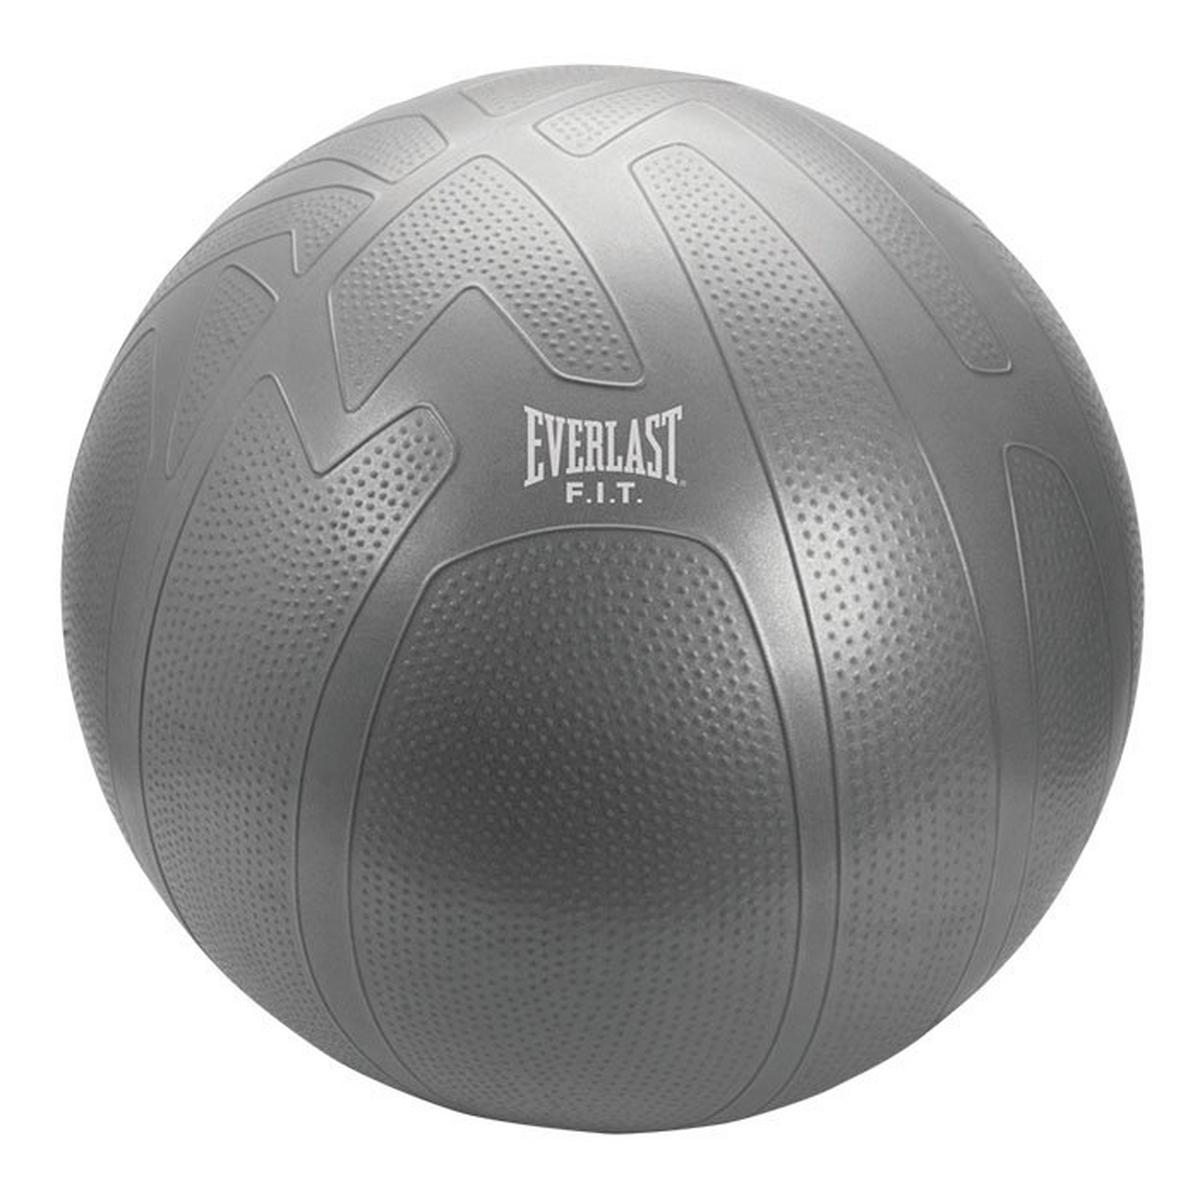 Pro Grip Fitness Ball (75cm)